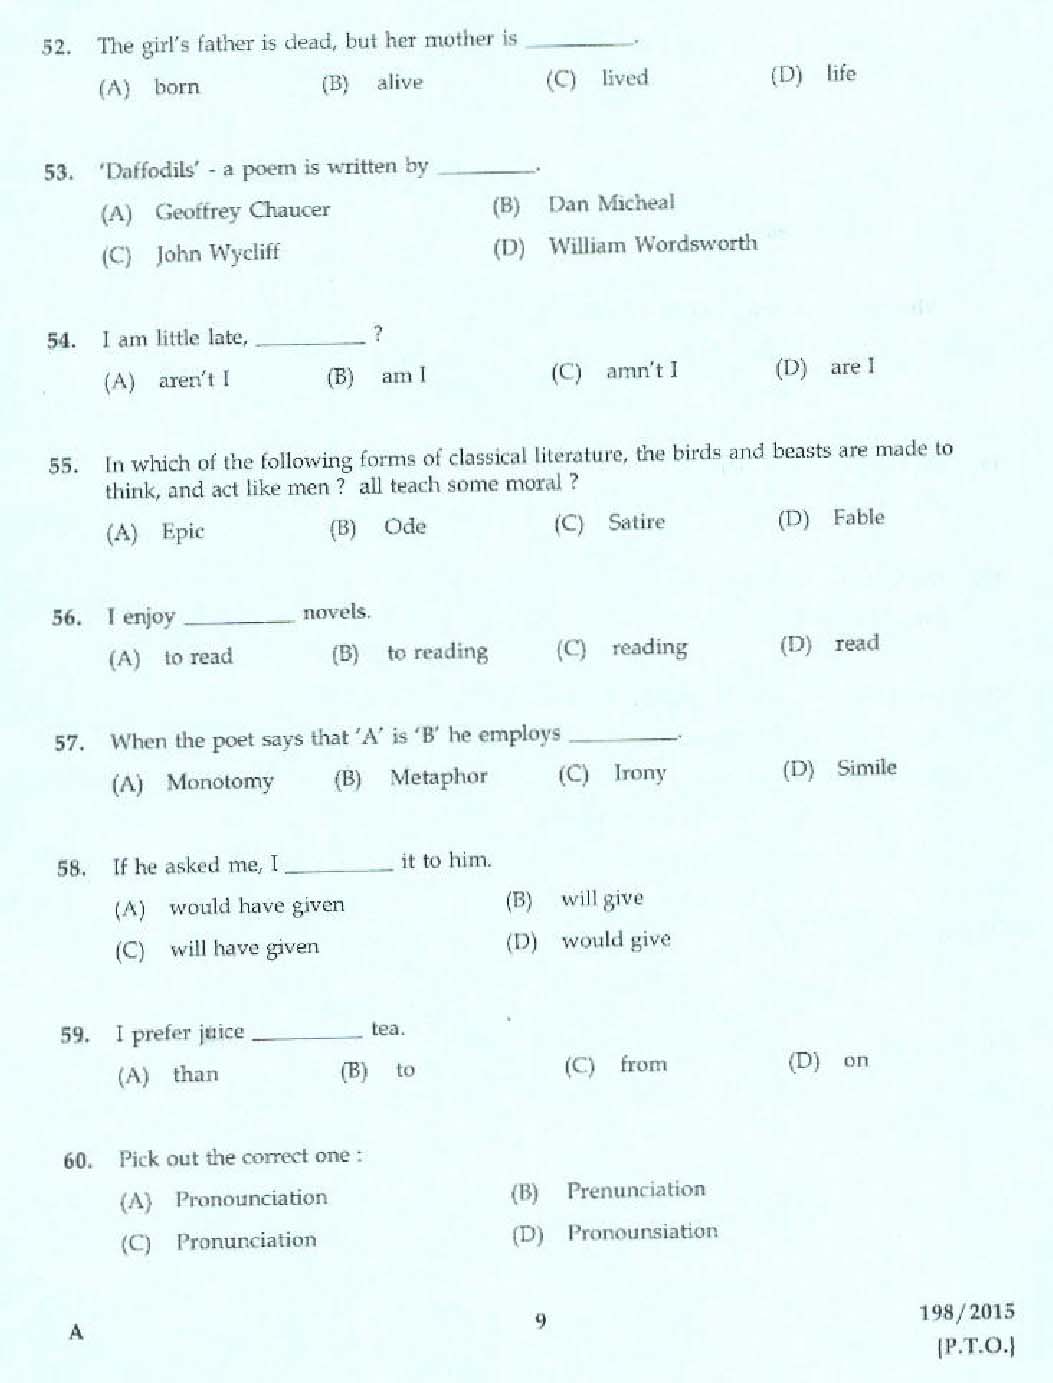 Kerala PSC Telephone Operator Exam Question Code 1982015 7